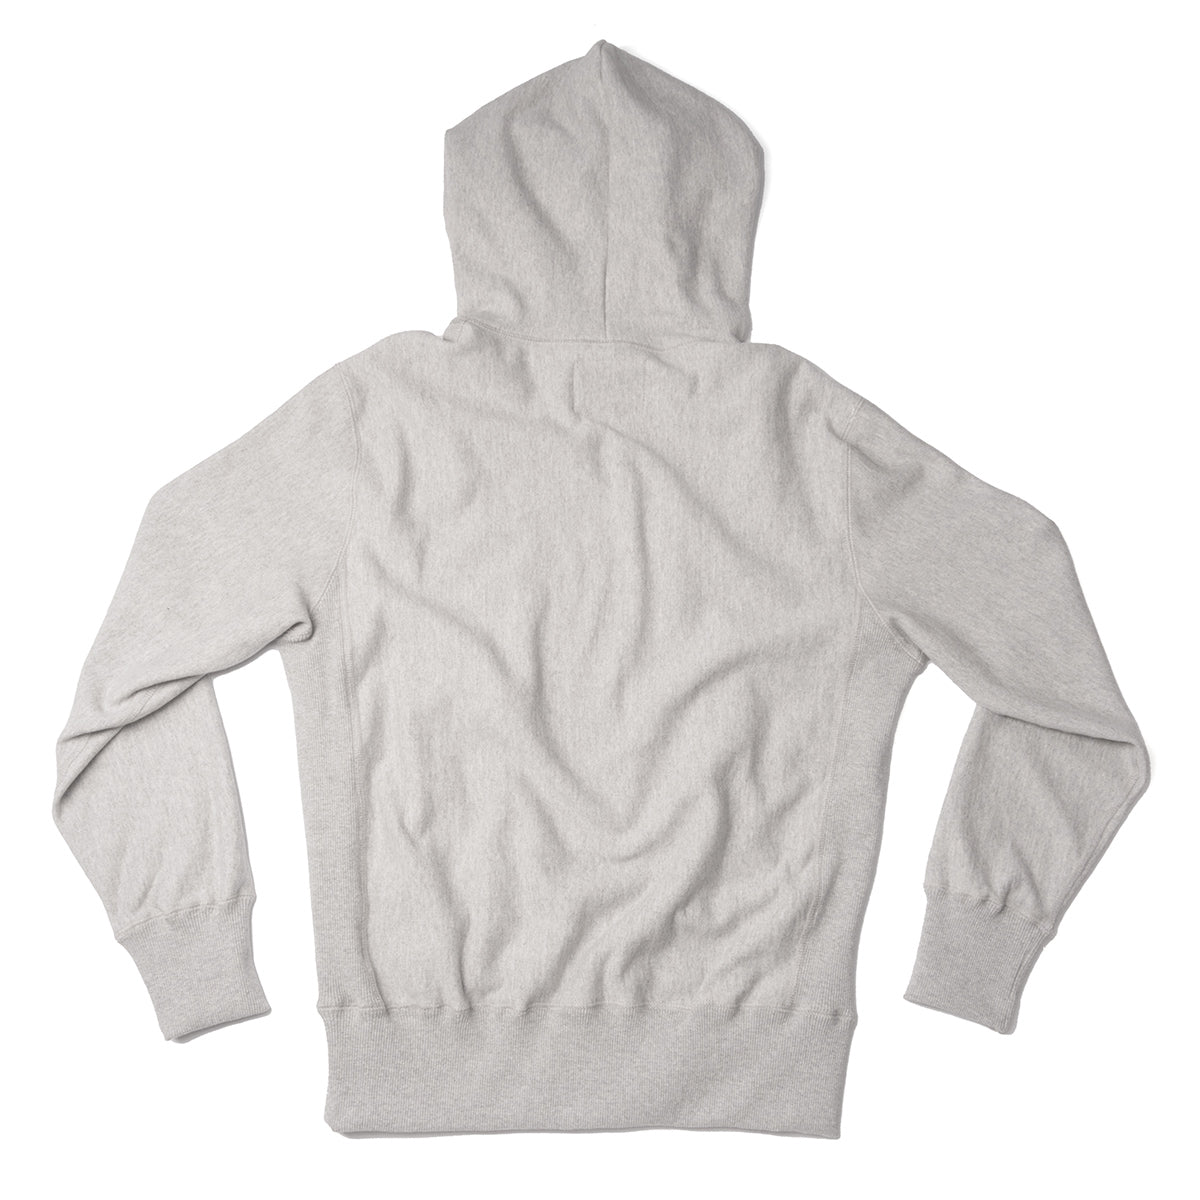 Lost Art Canada - heathered grey reverse weave icon hoodie sweatshirt back view